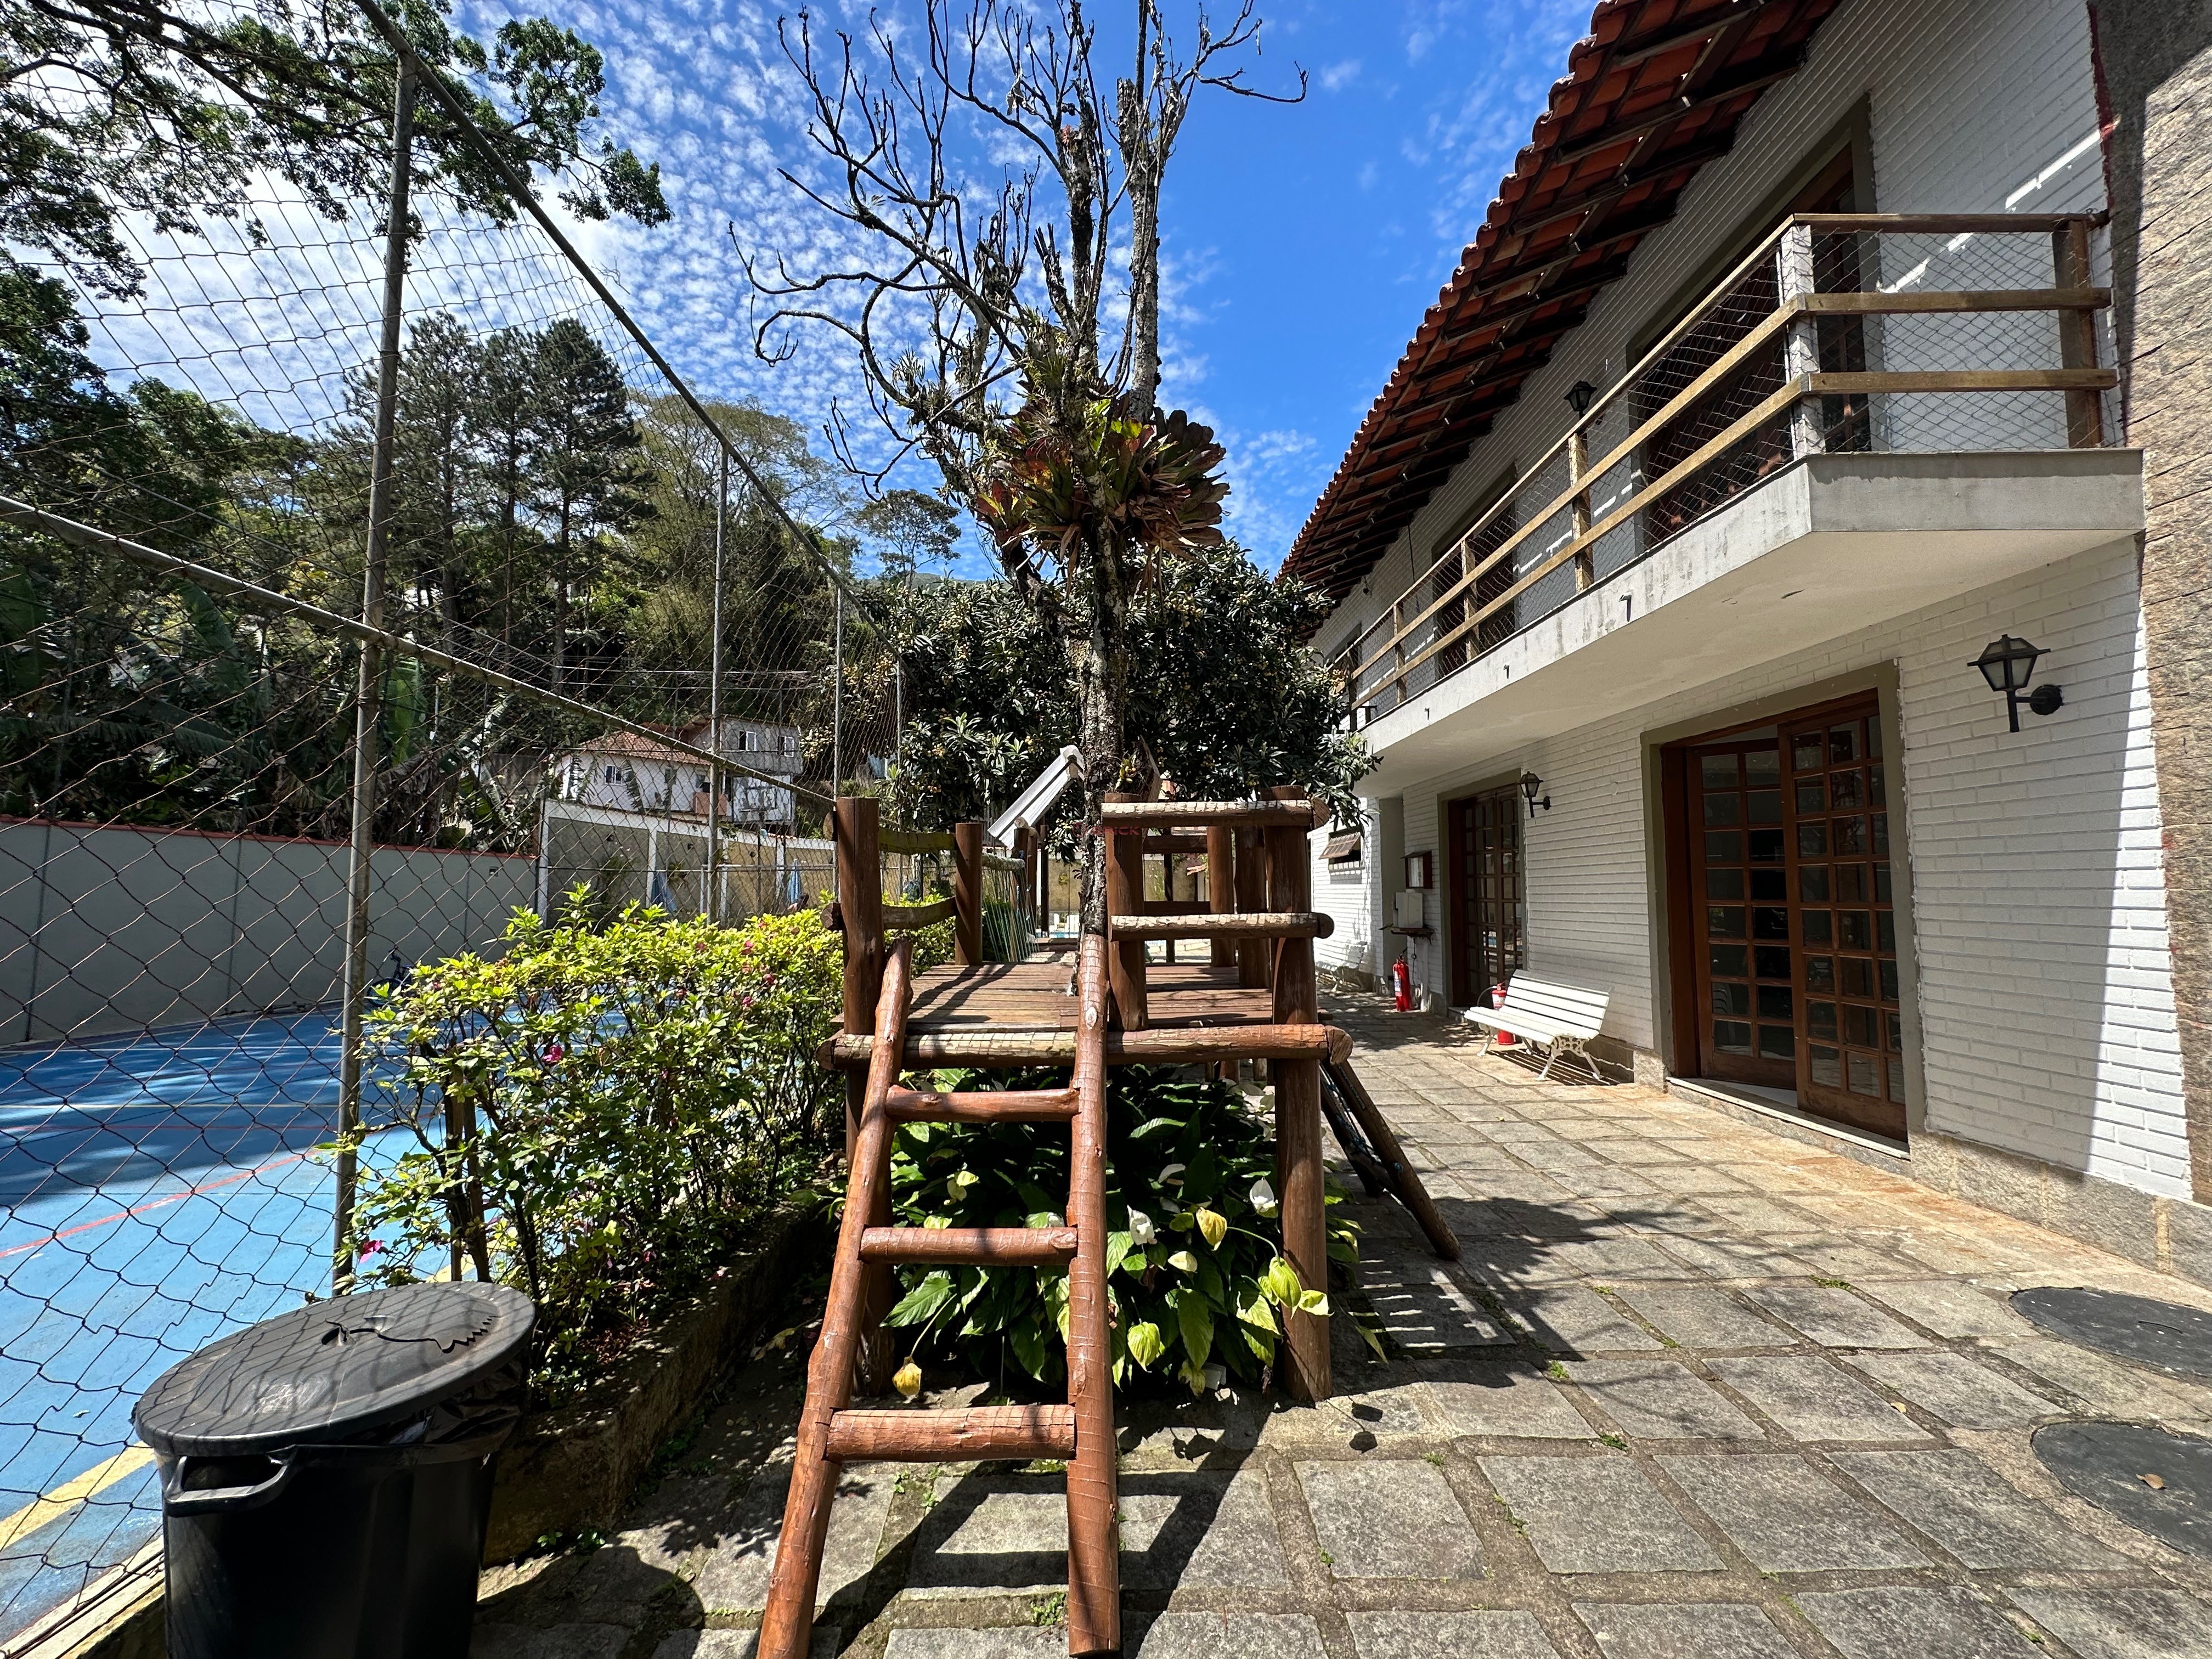 Casa à venda em Alto, Teresópolis - RJ - Foto 13